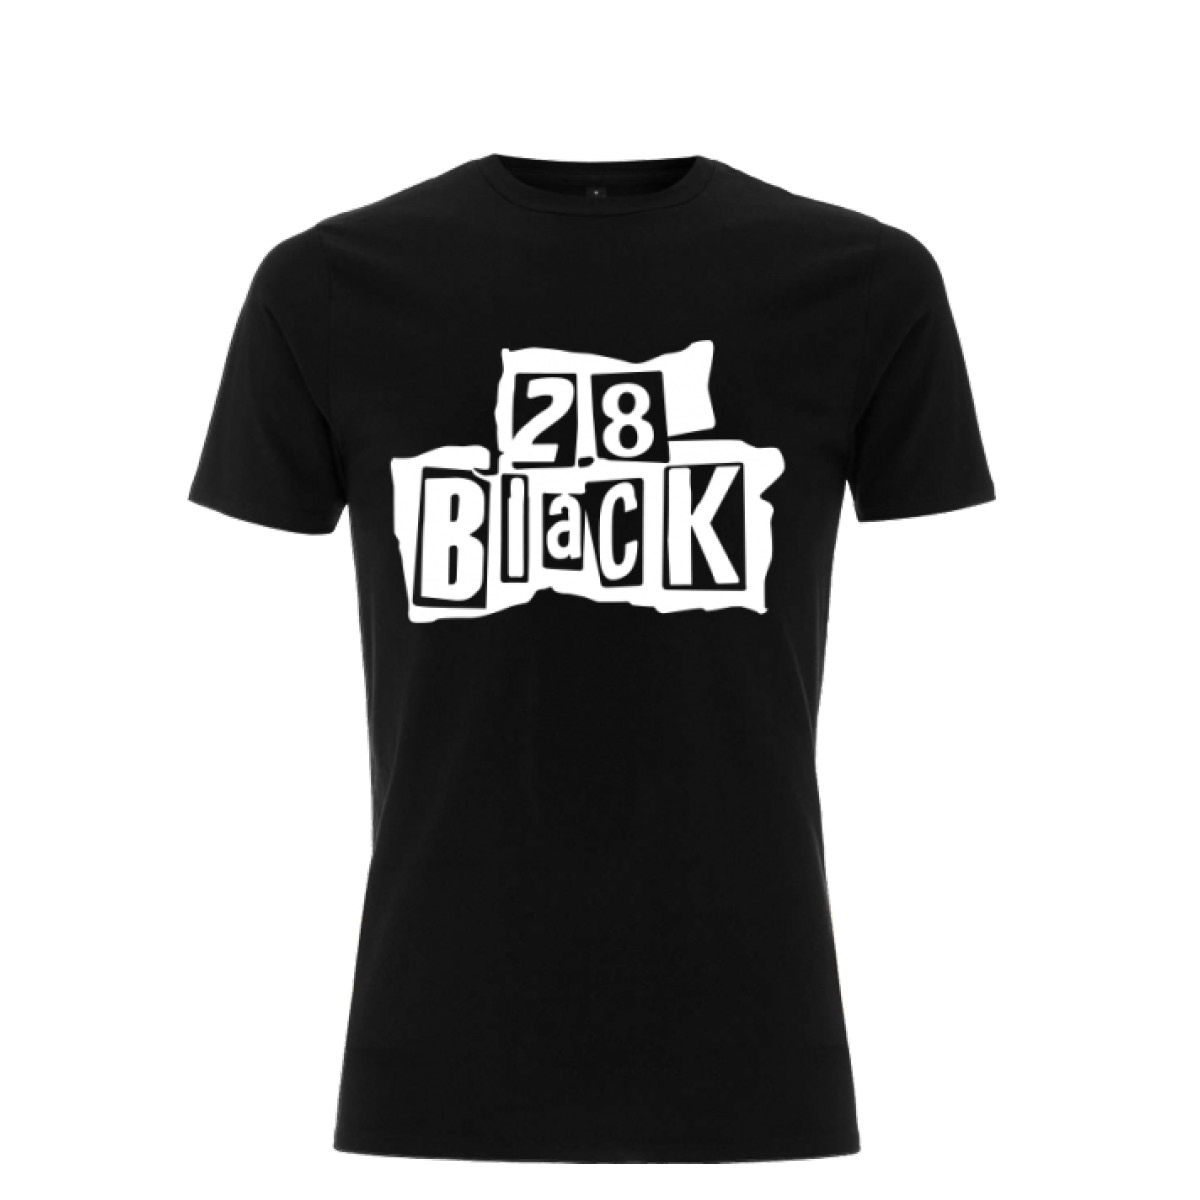 28 BLACK Band-Shirt…für dein punkiges Outfit